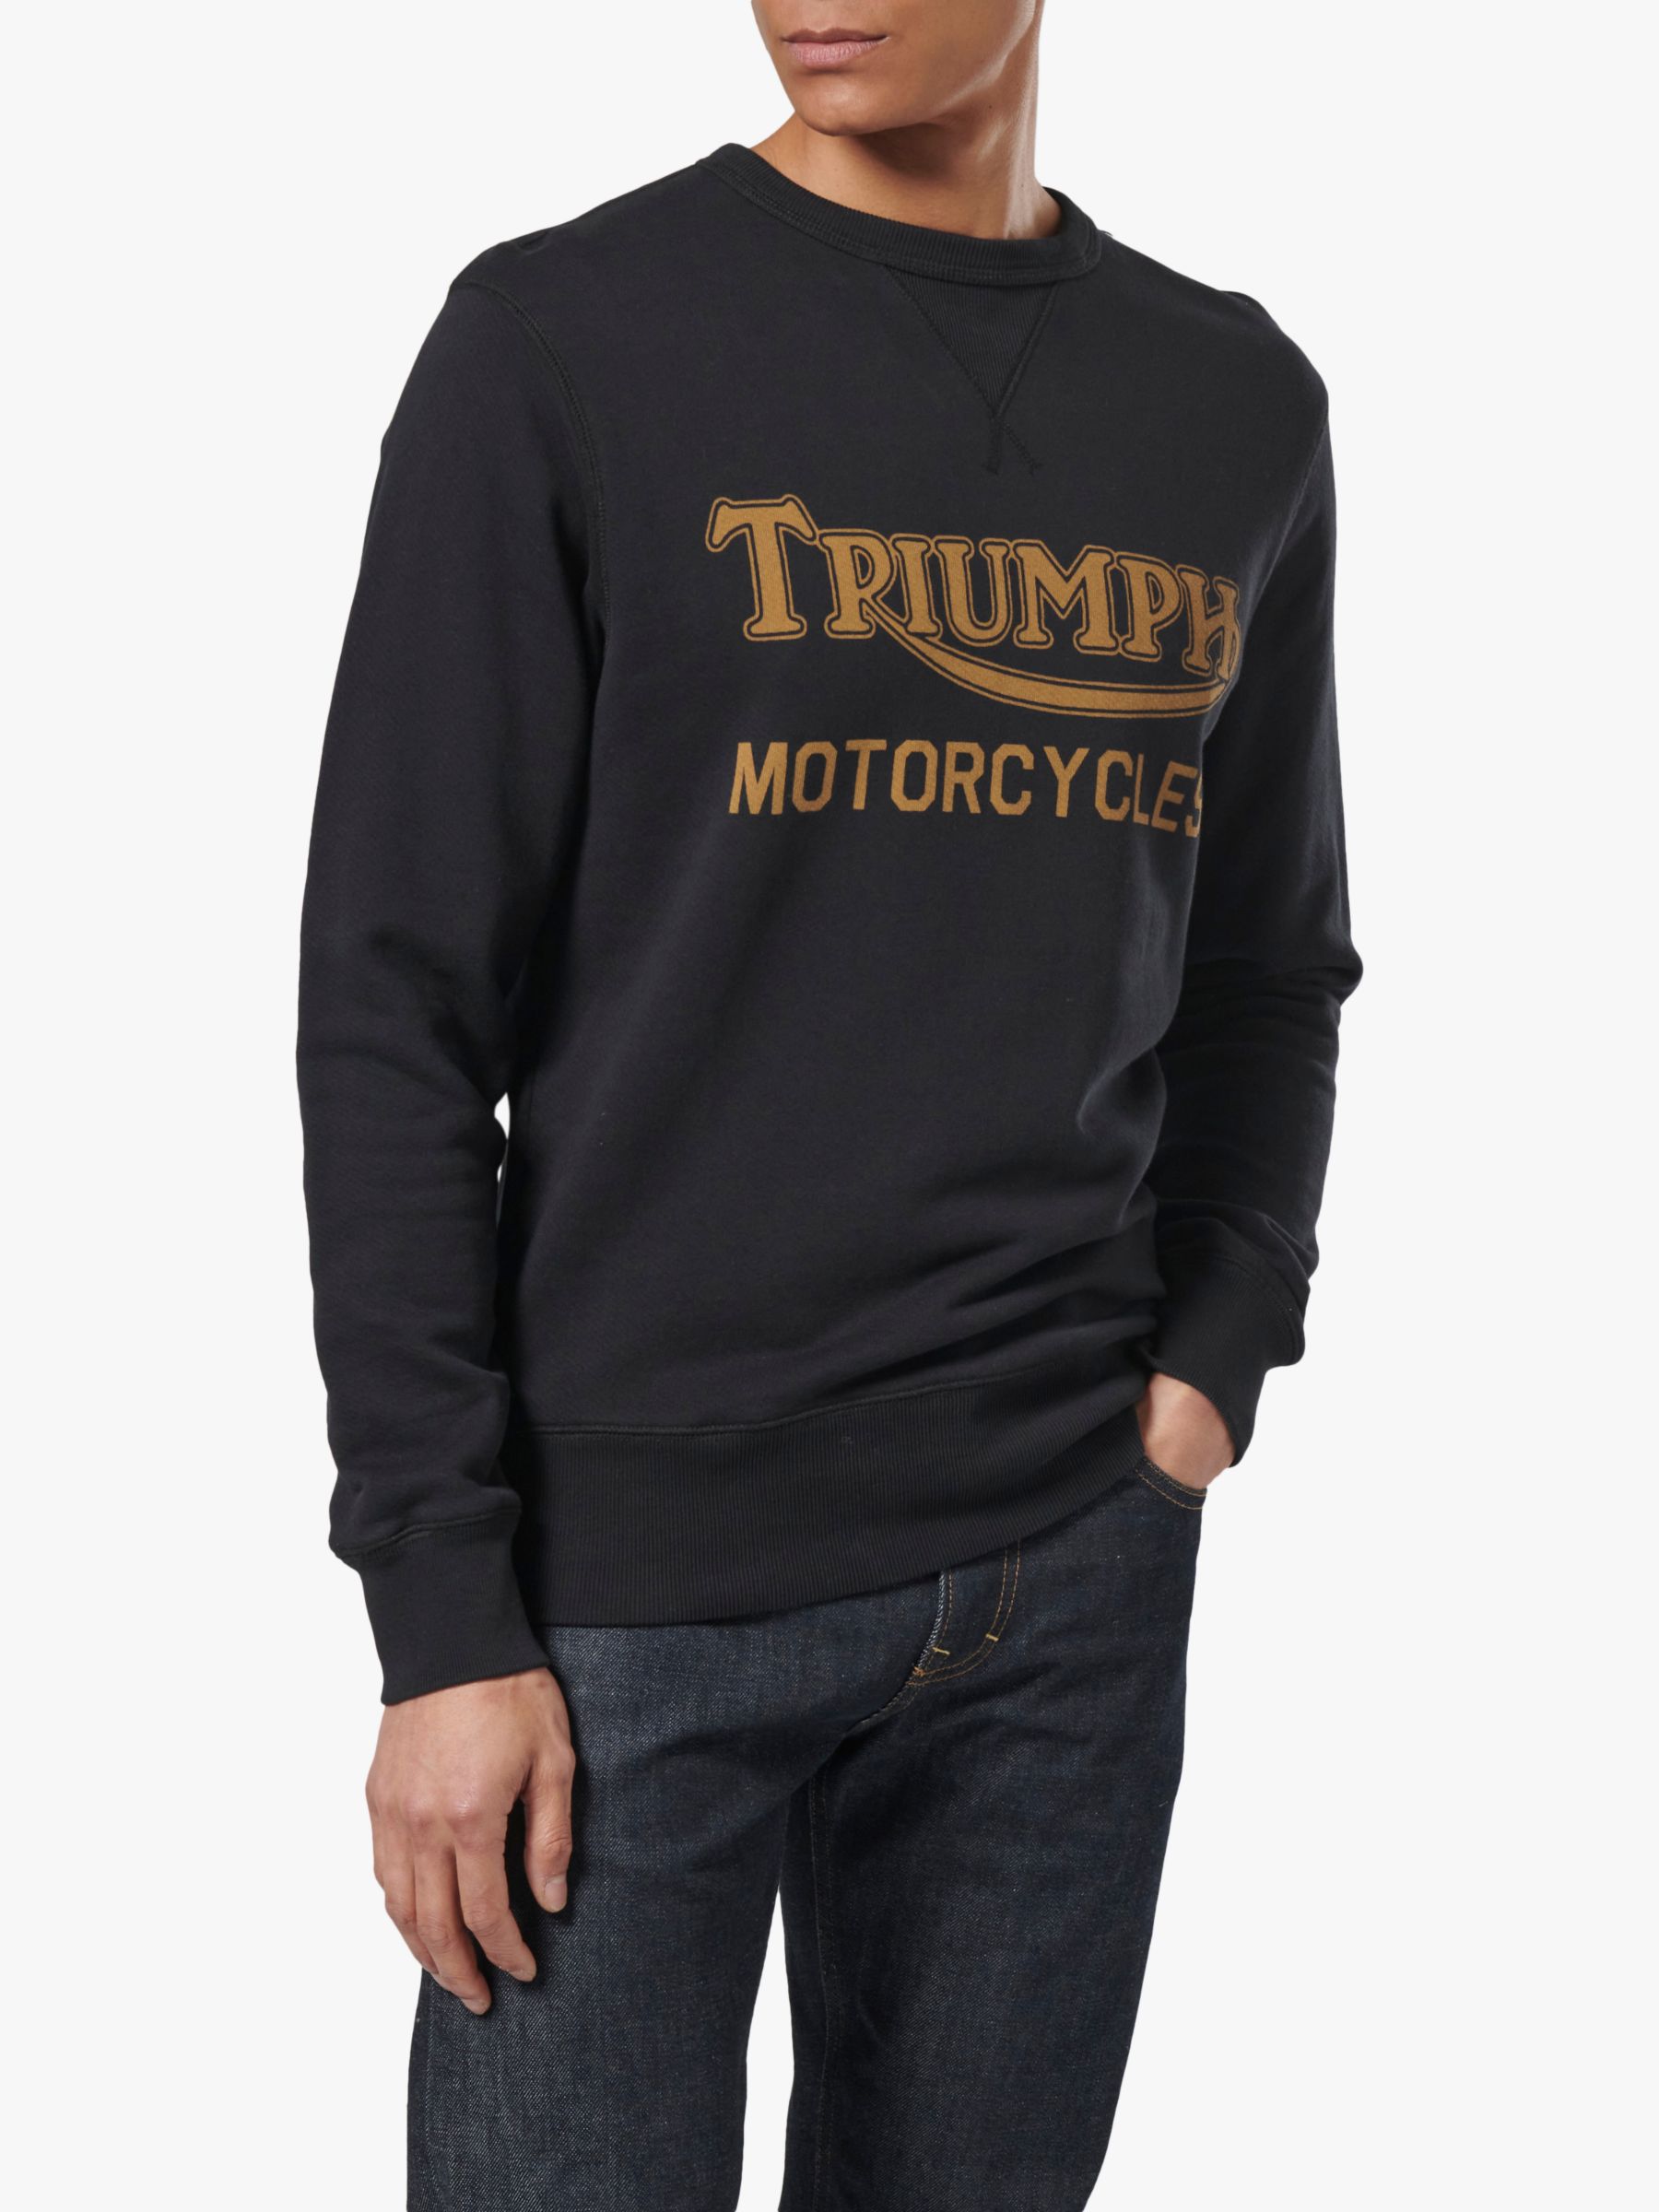 Triumph Motorcycles Radial Sweatshirt, Black, S